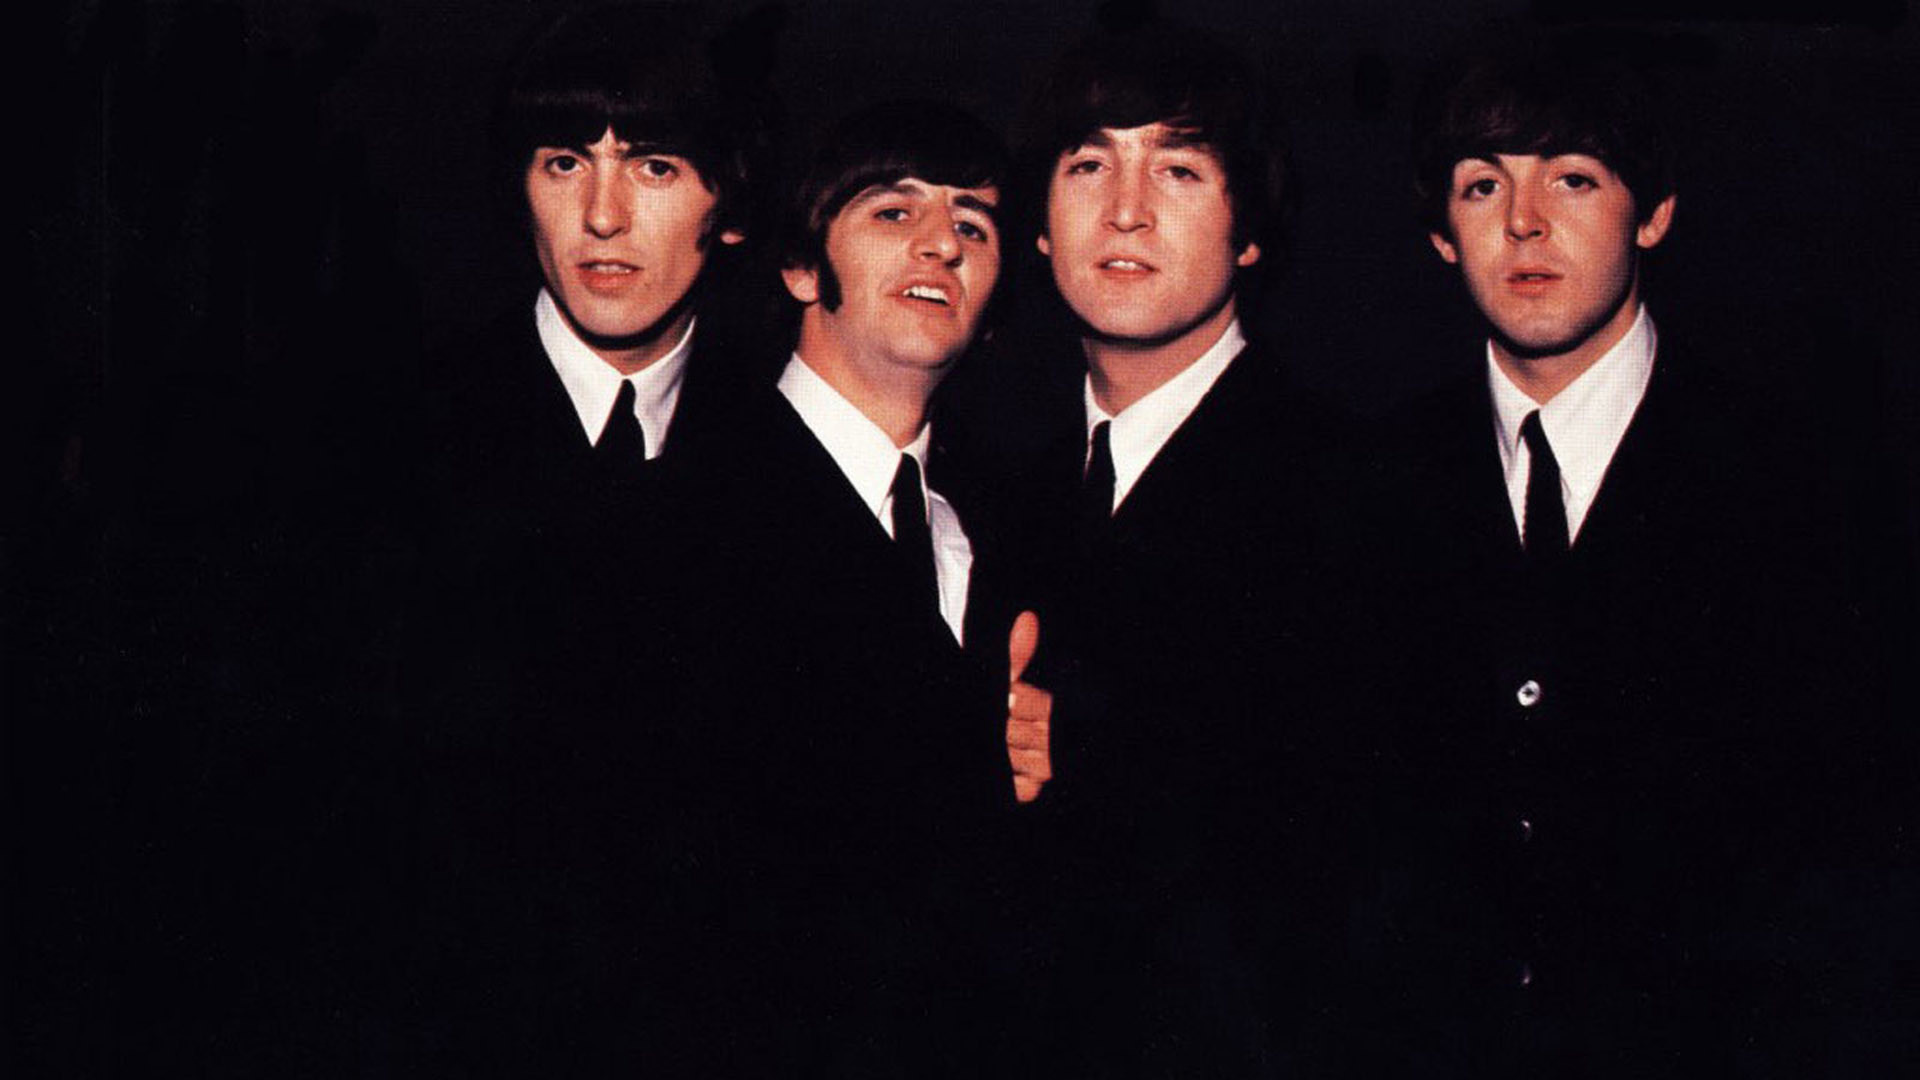 John Lennon, Best Beatles wallpapers, Timeless band, Musical masterpiece, 1920x1080 Full HD Desktop